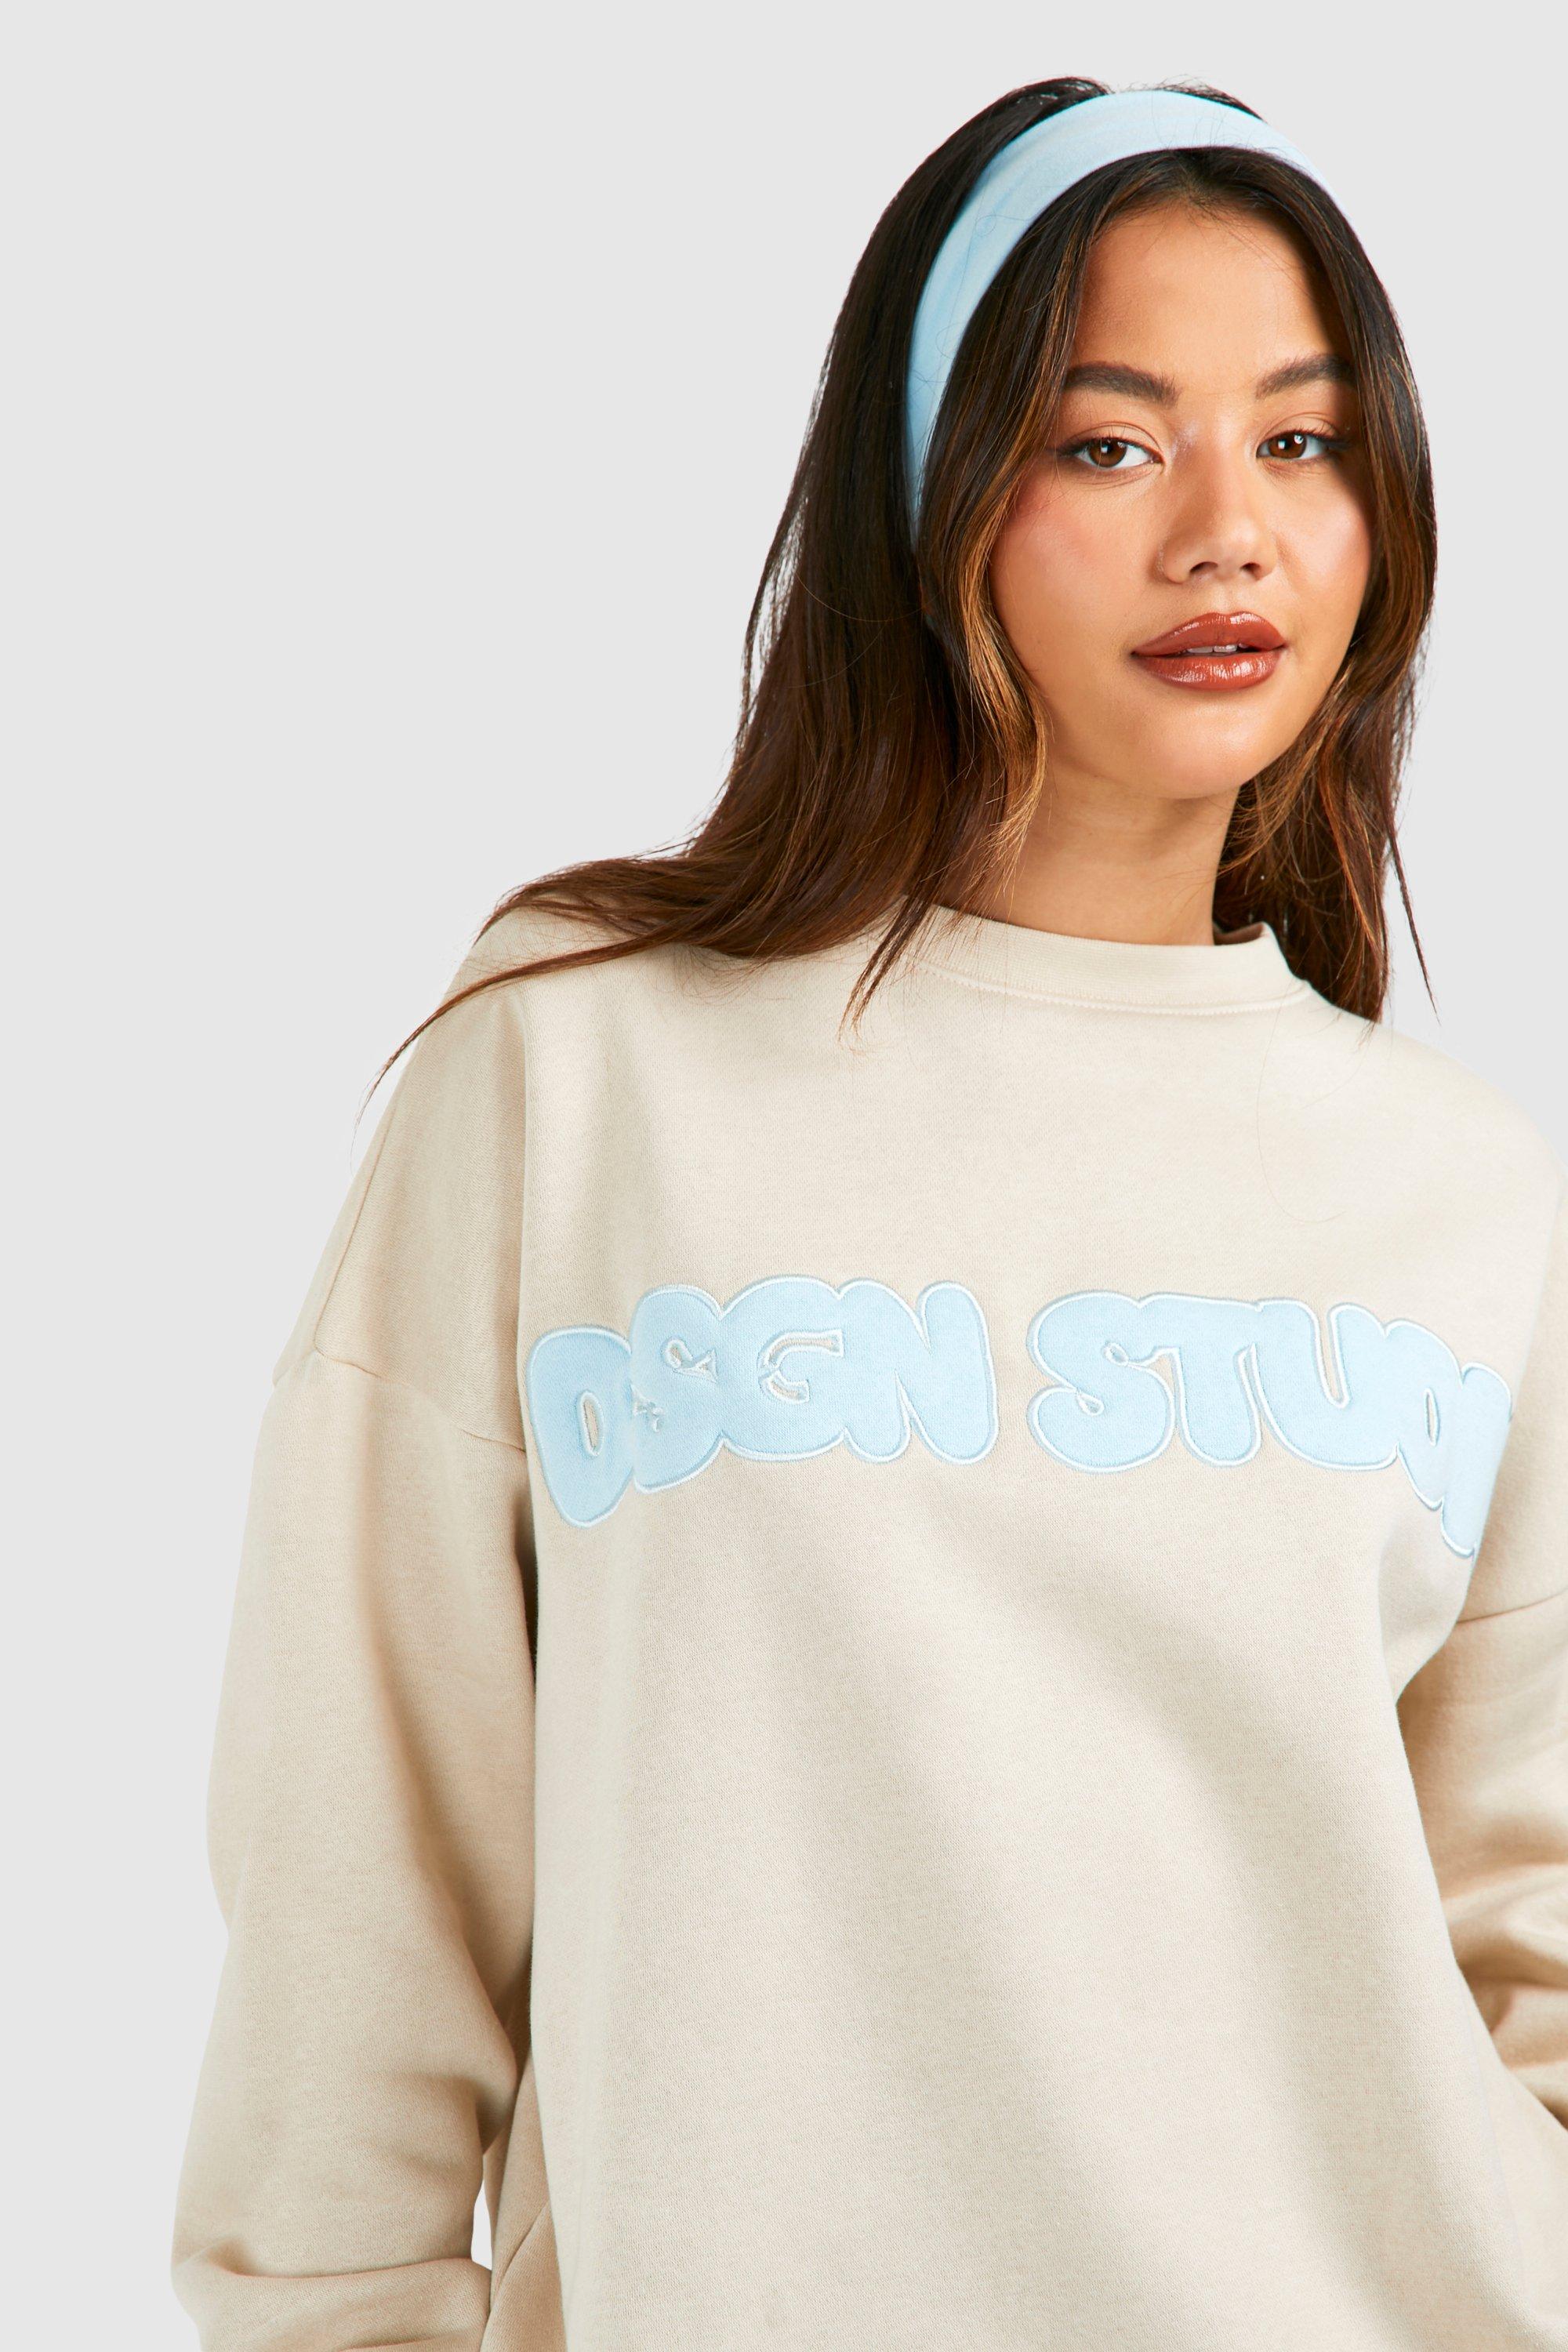 Dsgn Studio Applique Oversized Sweatshirt For Women-Bho-2381-Stone